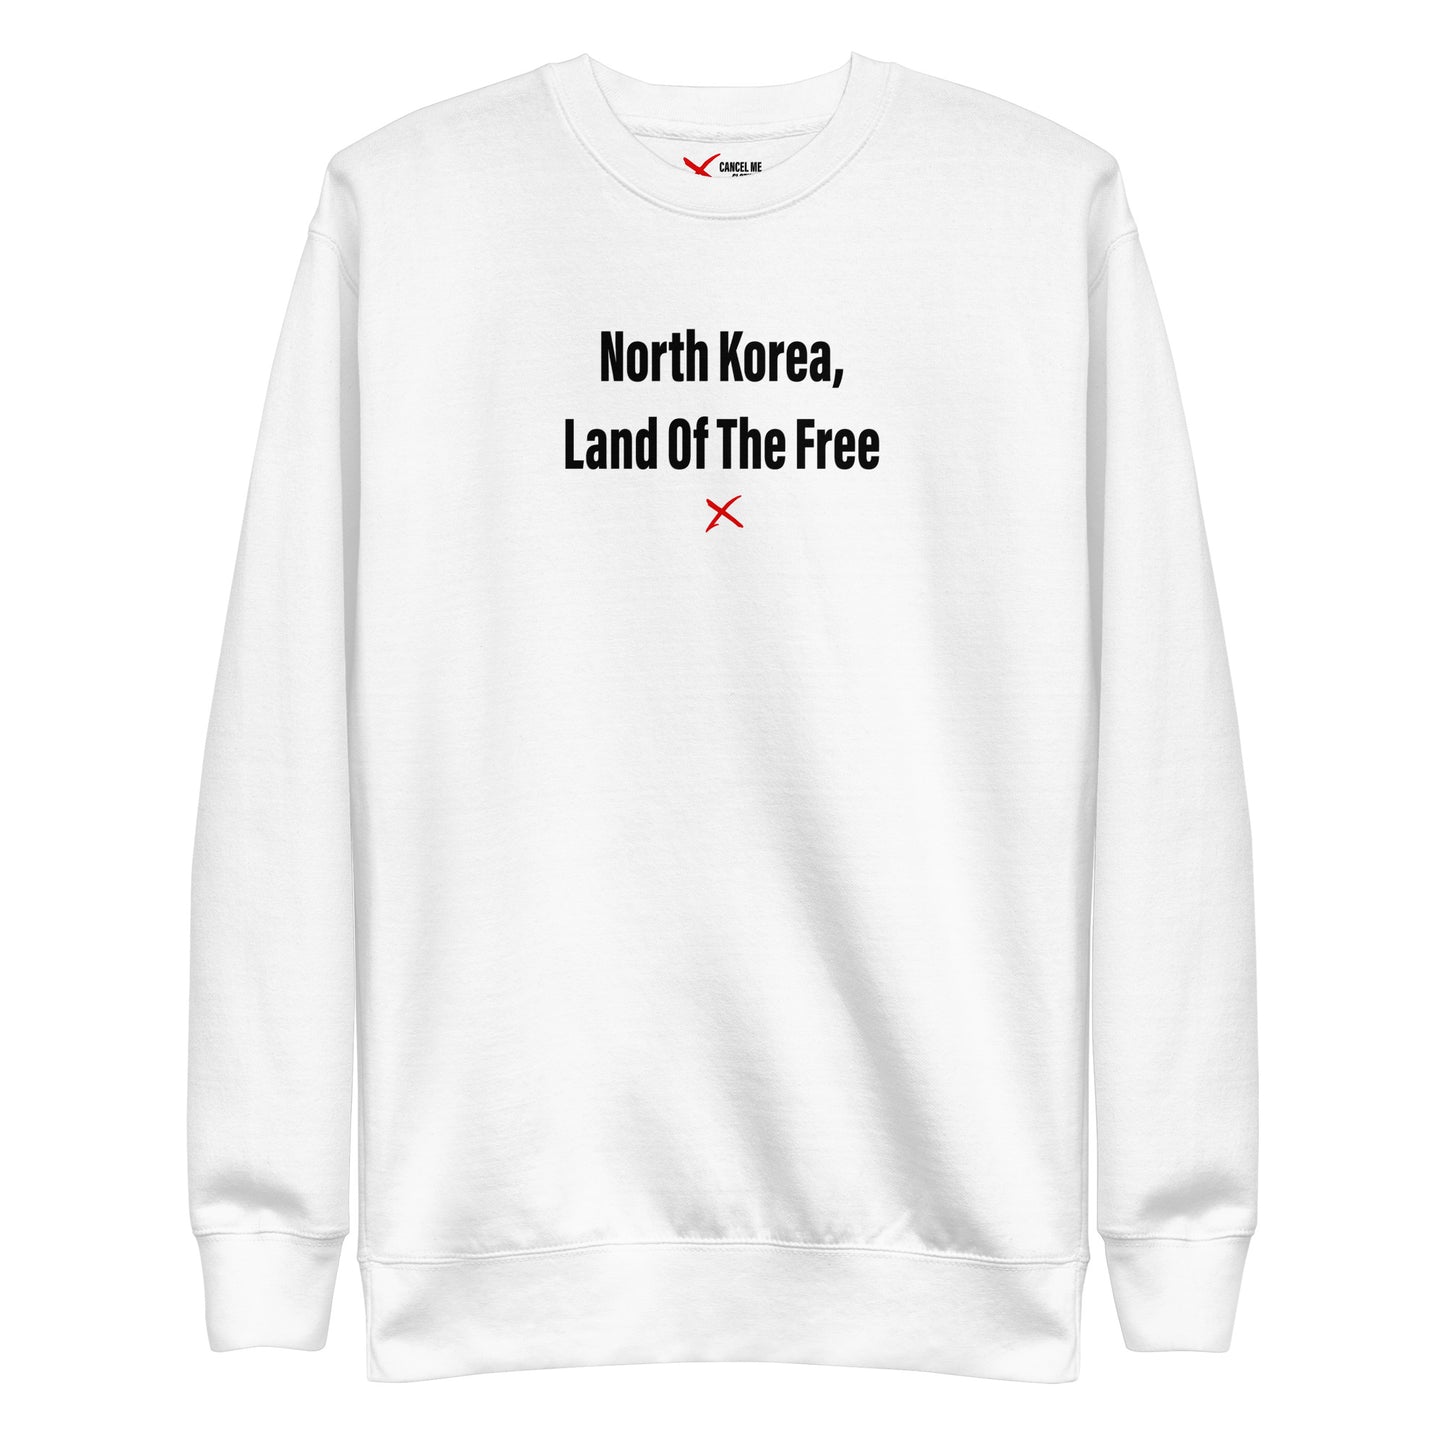 North Korea, Land Of The Free - Sweatshirt